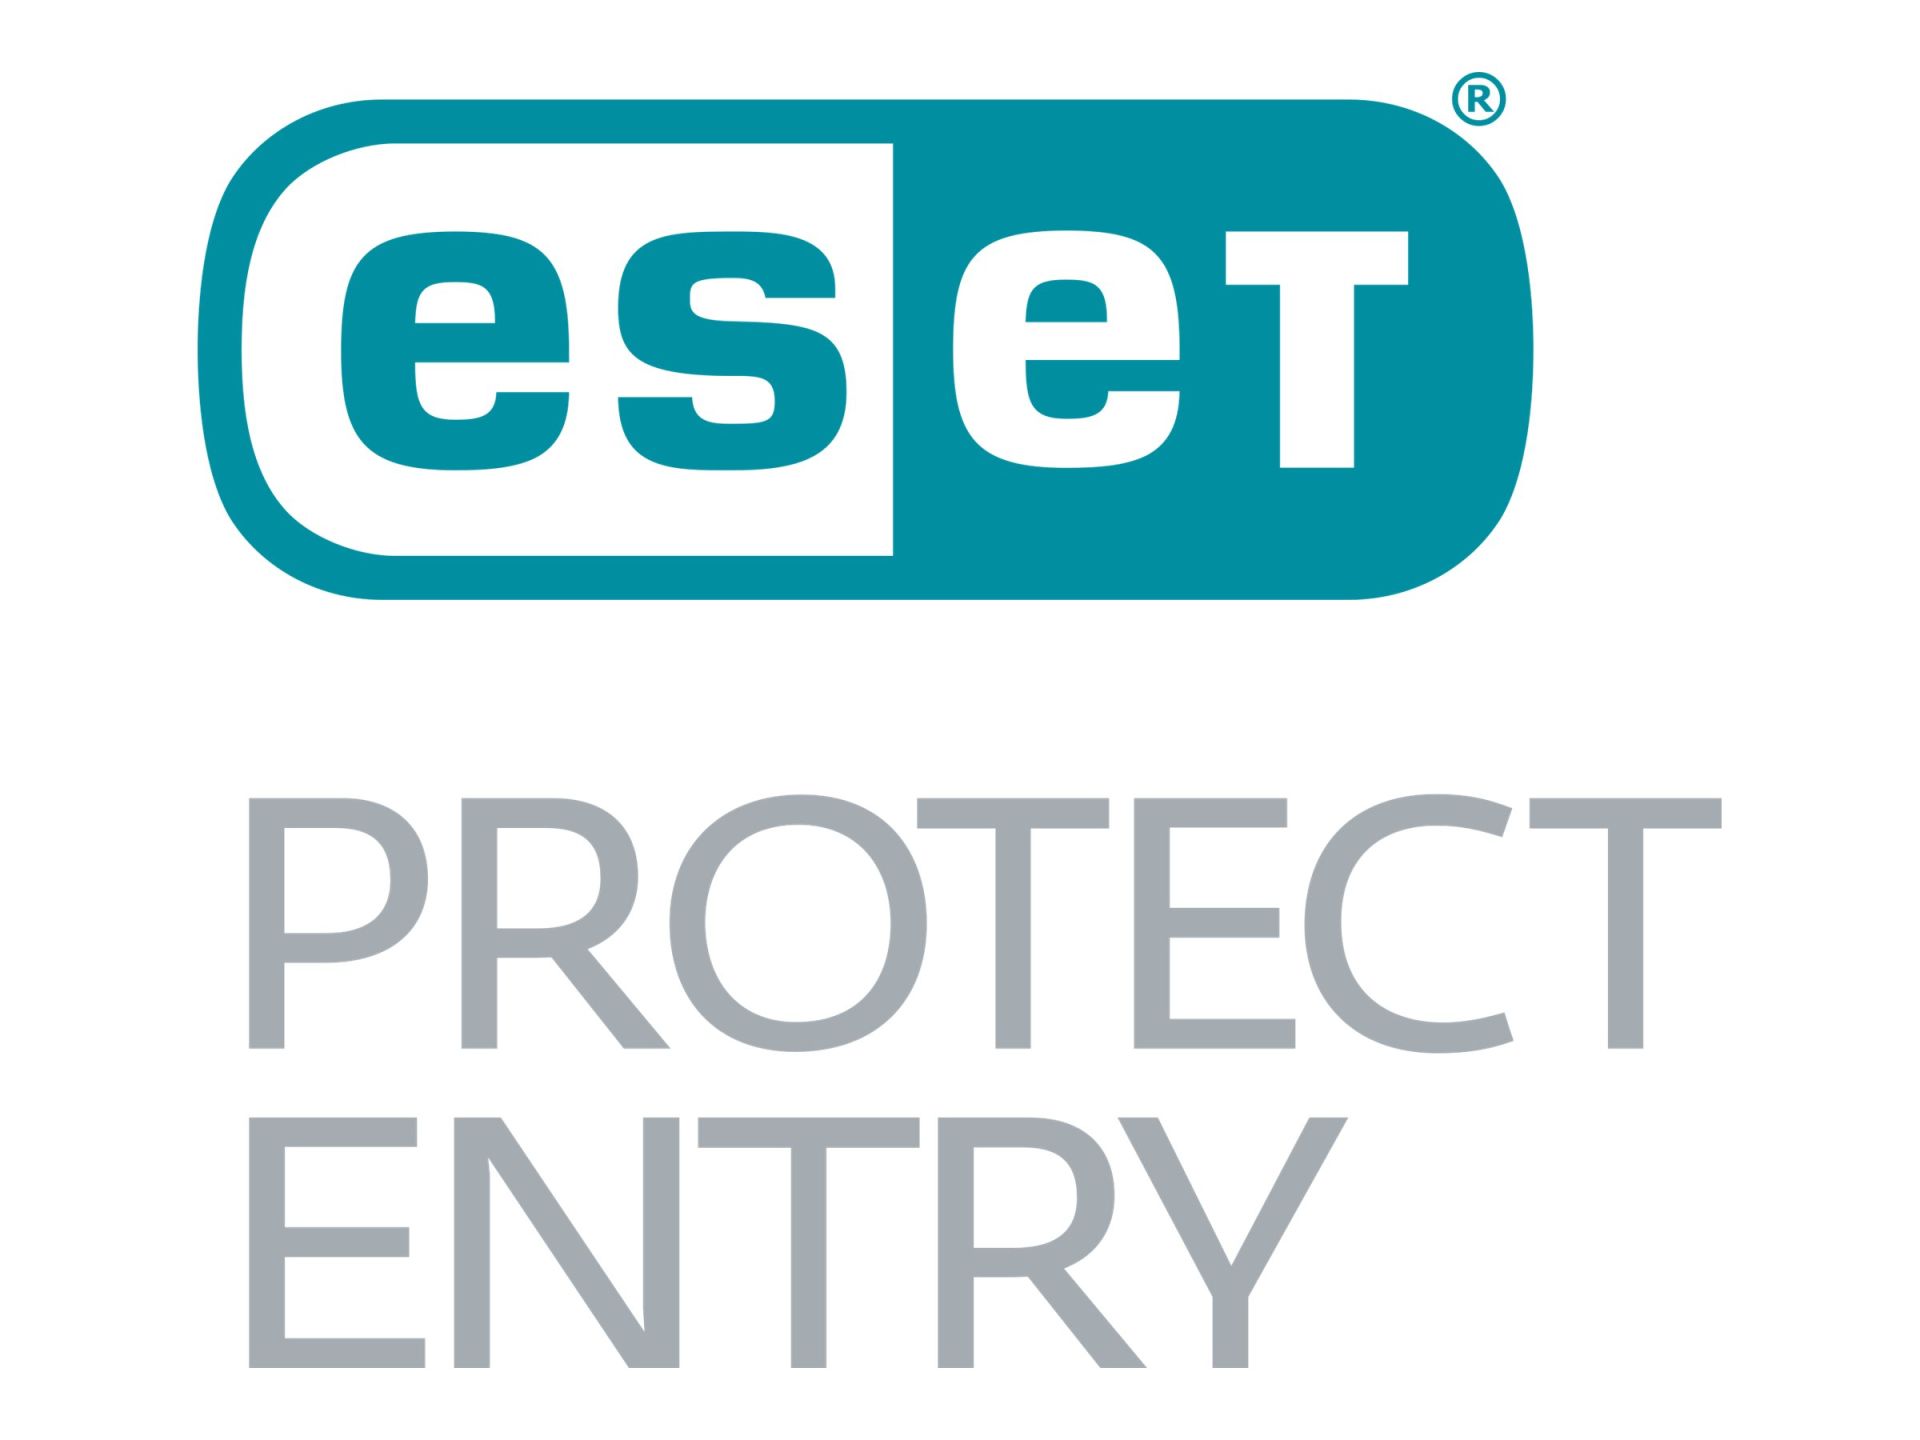 ESET PROTECT Entry On-Prem (ESET Endpoint Protection Advanced) Lizenz per Devices (5-10 Devices) inklusive 2 Jahre Aktualisierungsgarantie